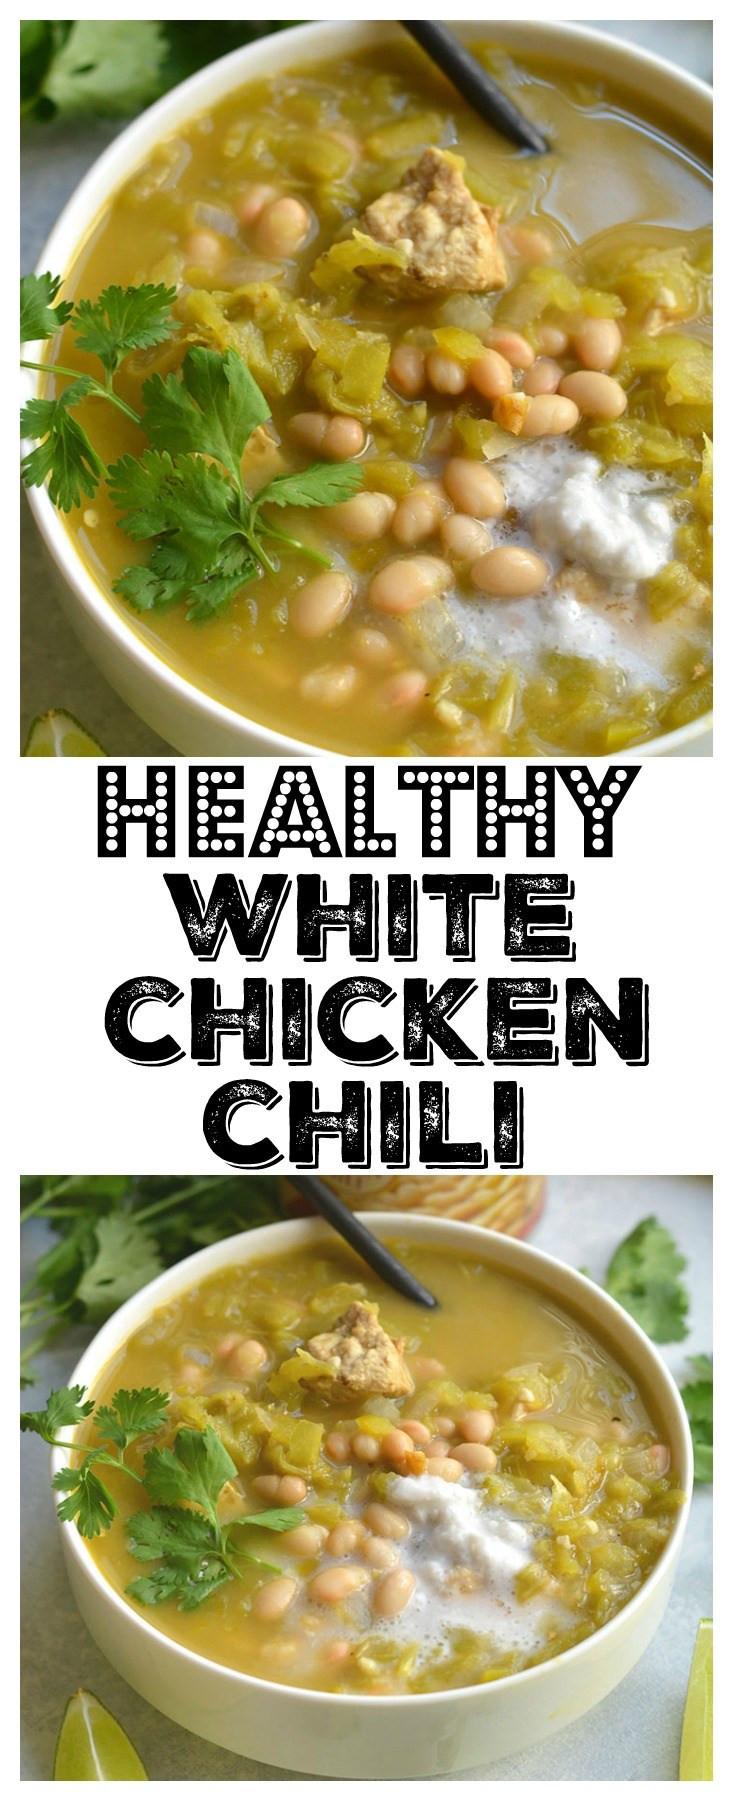 White Chicken Chili Healthy
 Healthy White Chicken Chili GF Low Cal Skinny Fitalicious